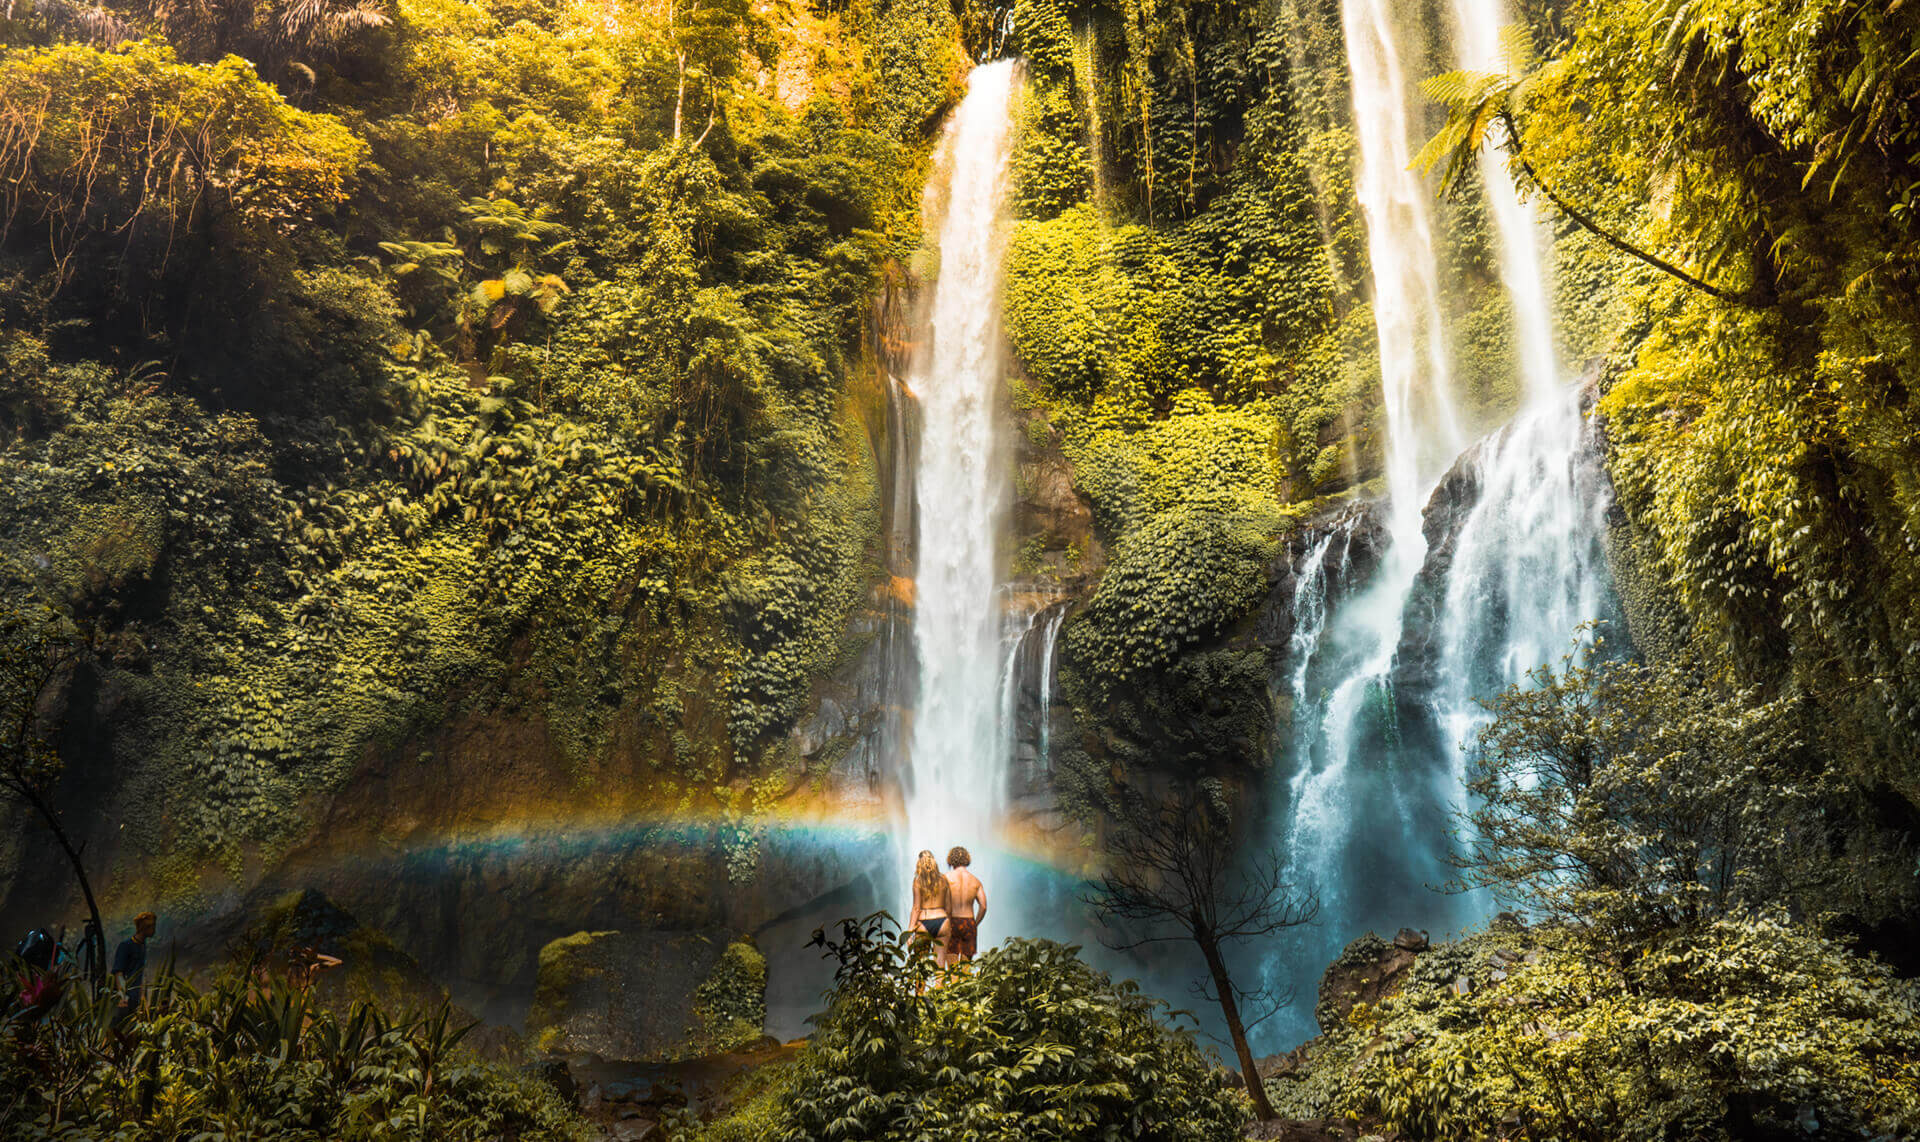 BALI WATERFALL ROUTE | 6 most beautiful waterfalls on Bali, Indonesia